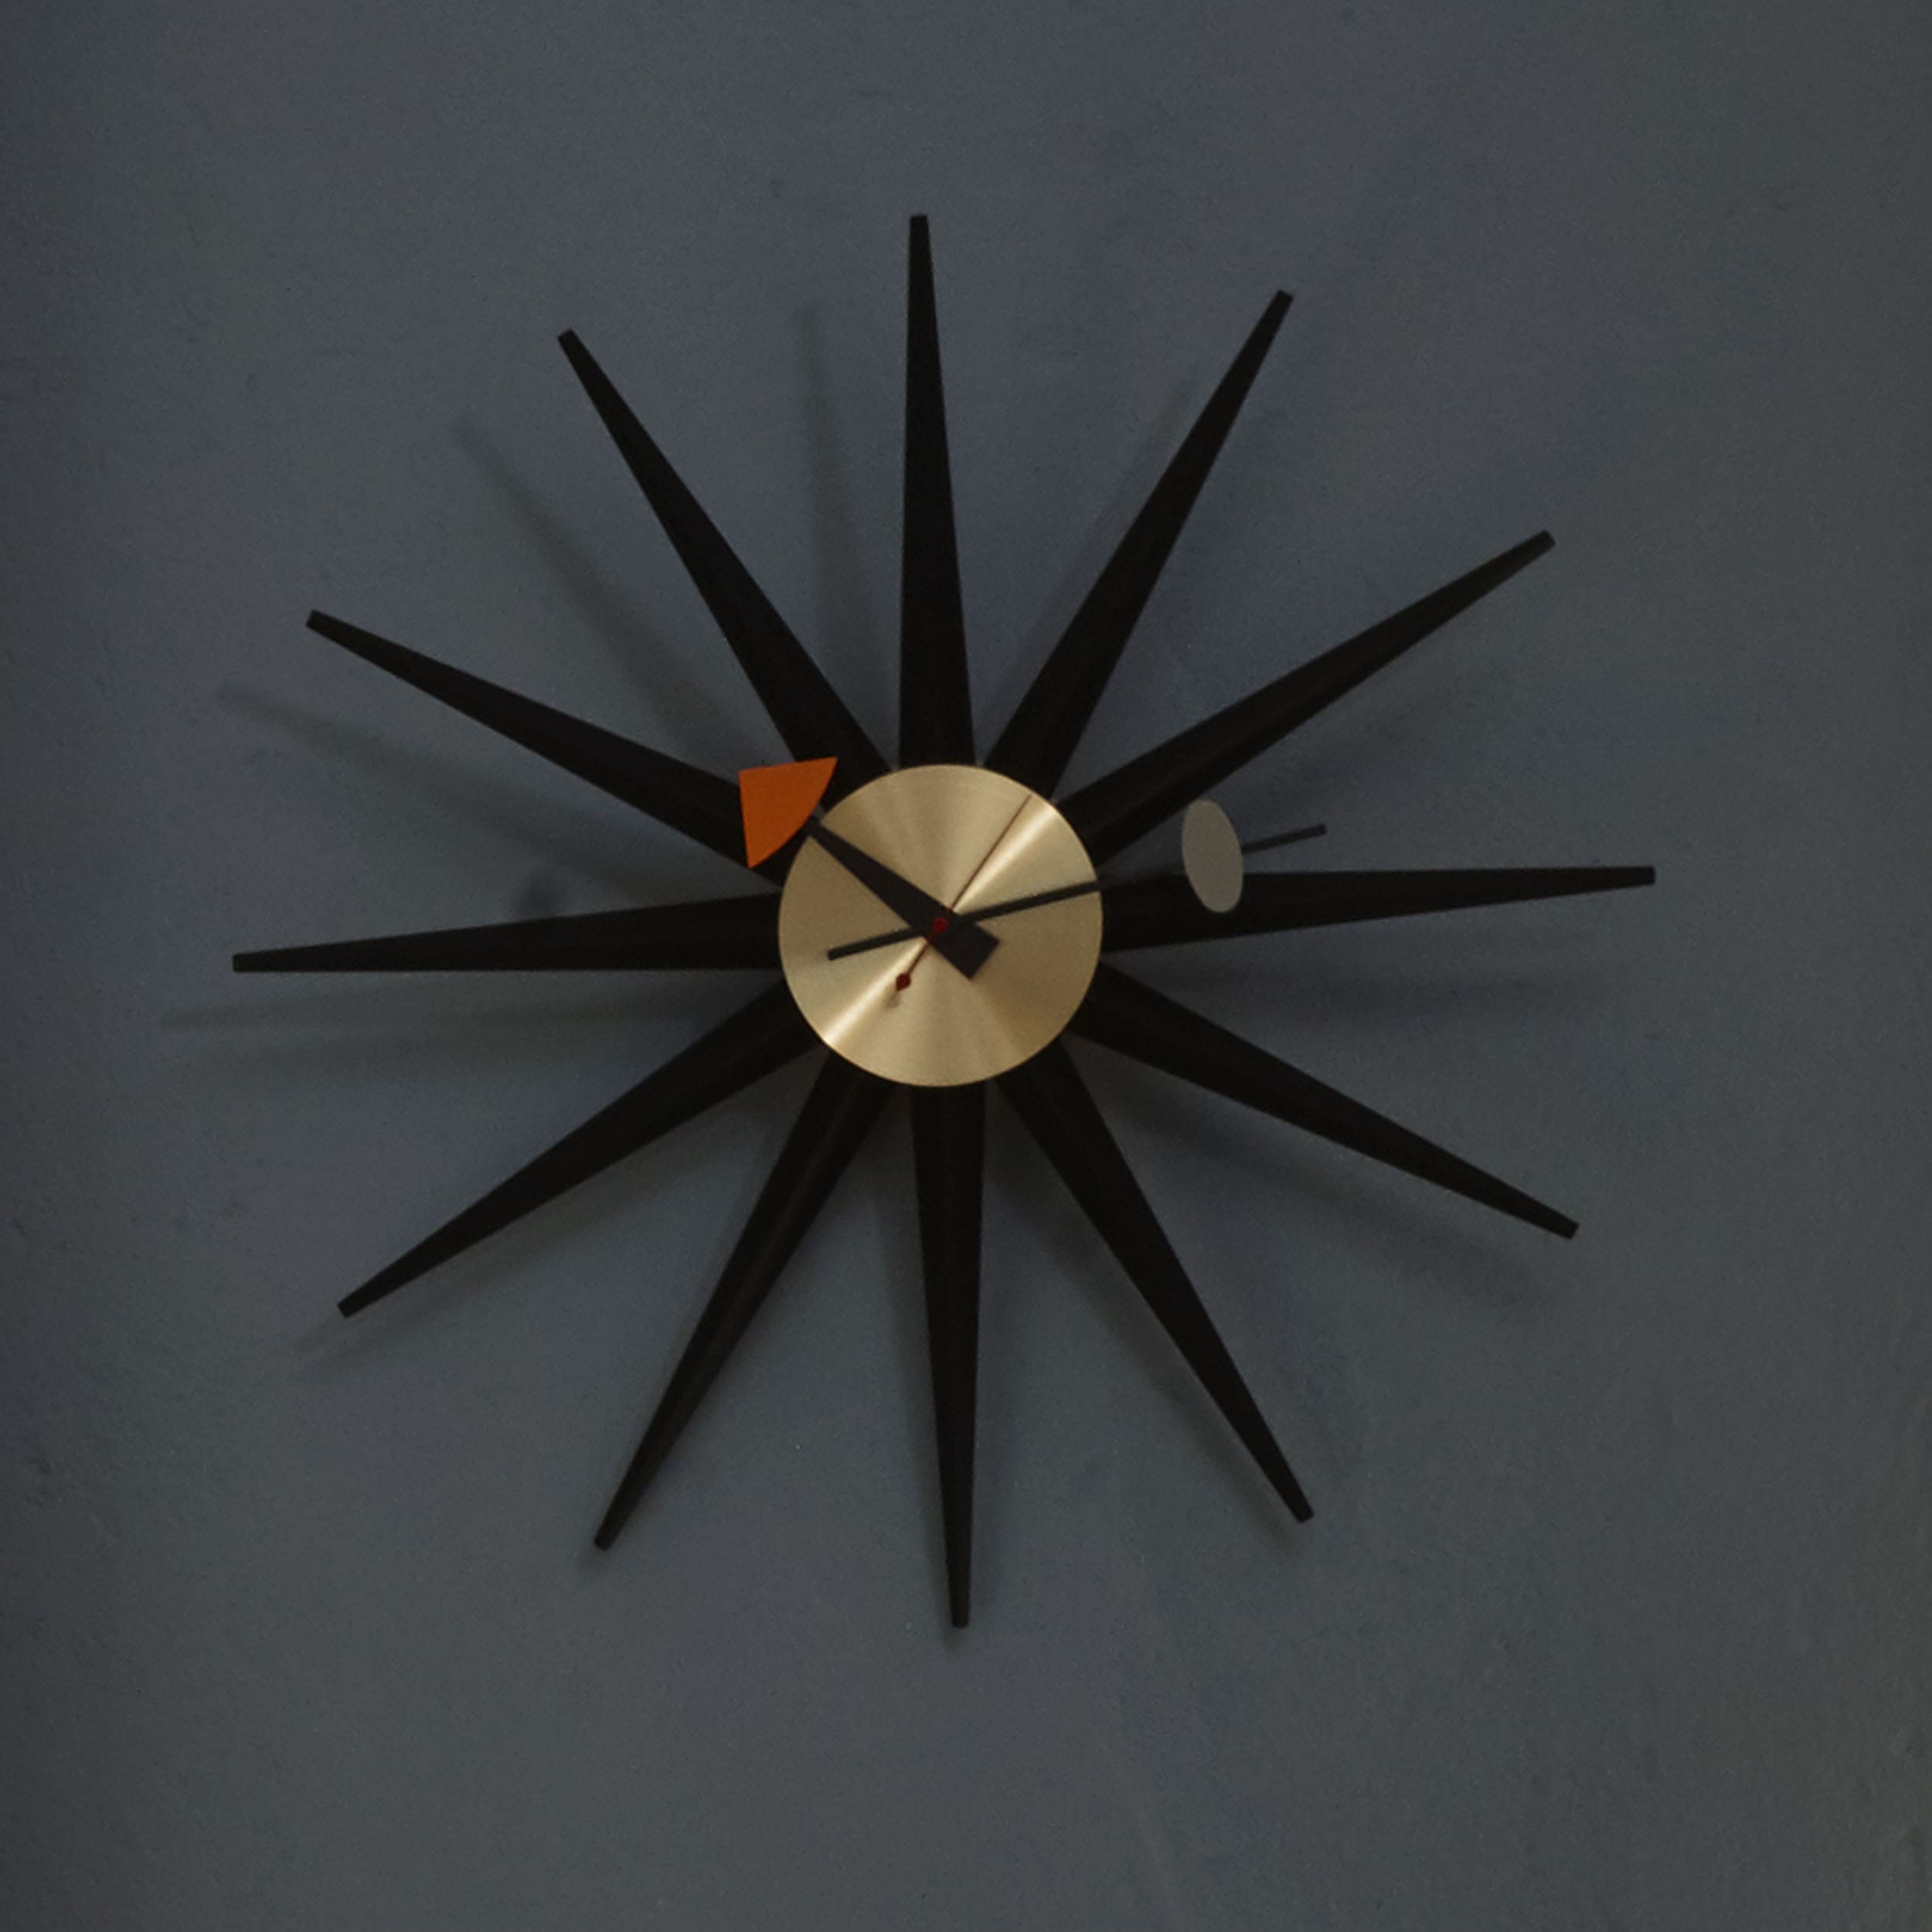 Sunburst Clock Wanduhr